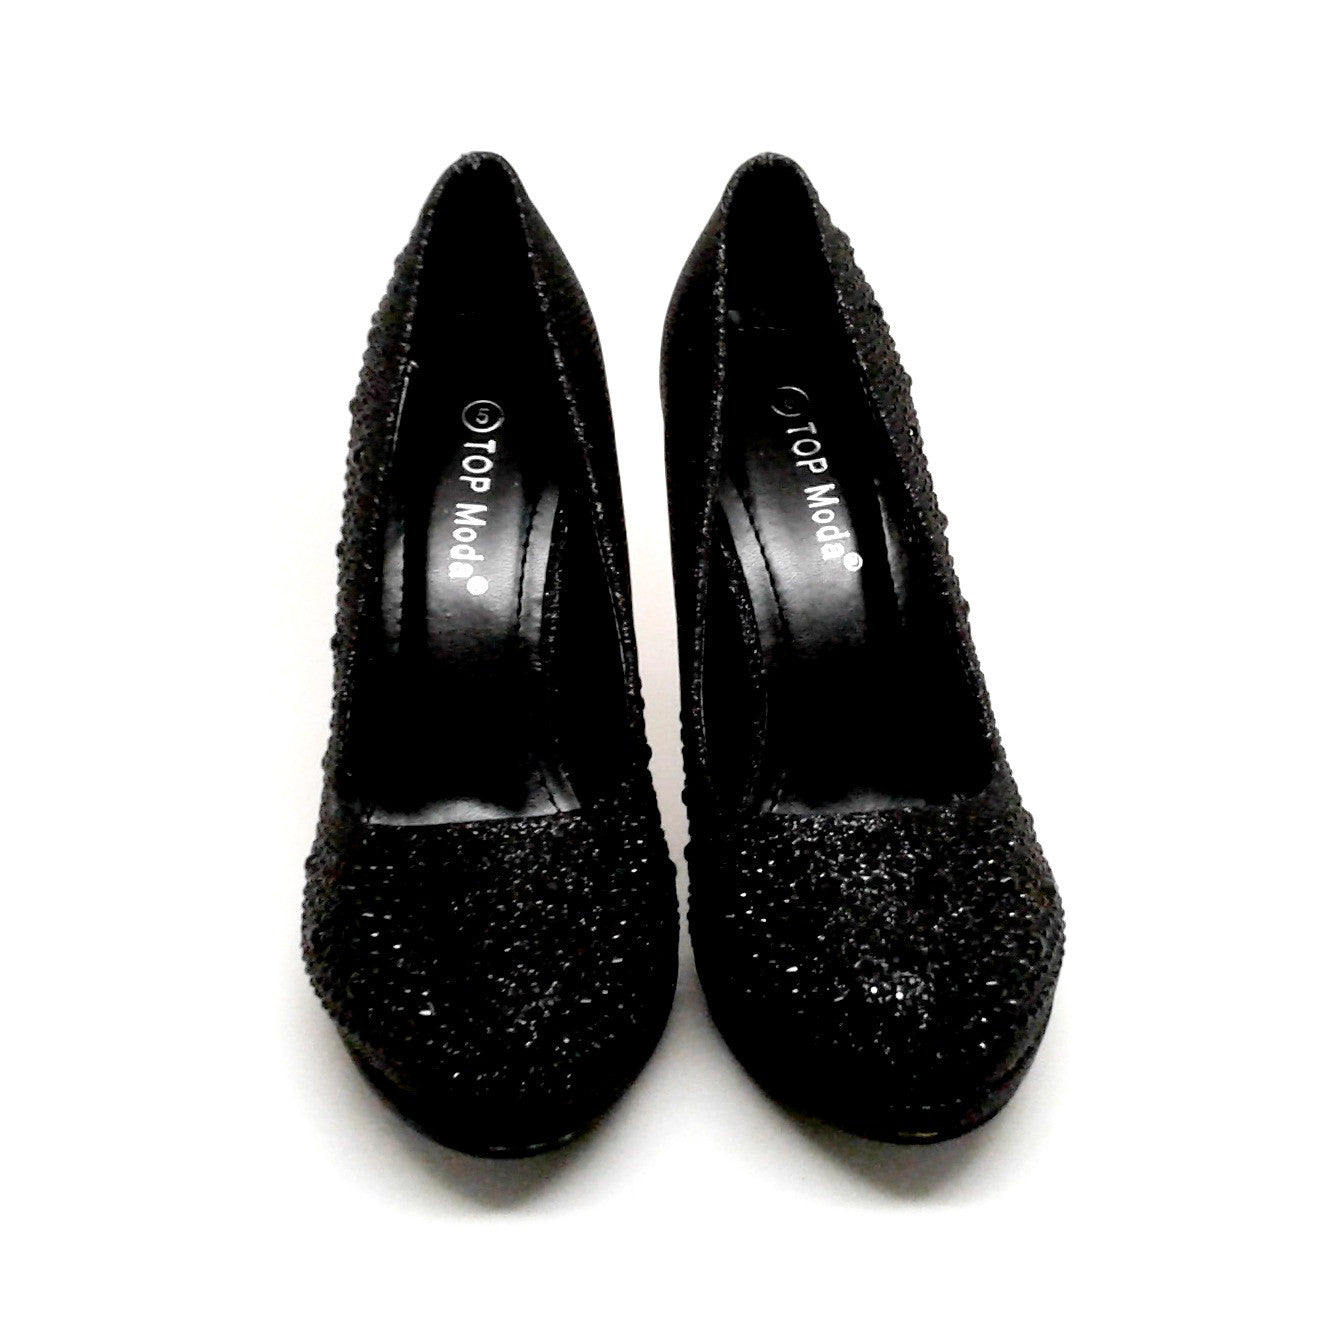 Black Glitter Heels with Rhinestones Detail